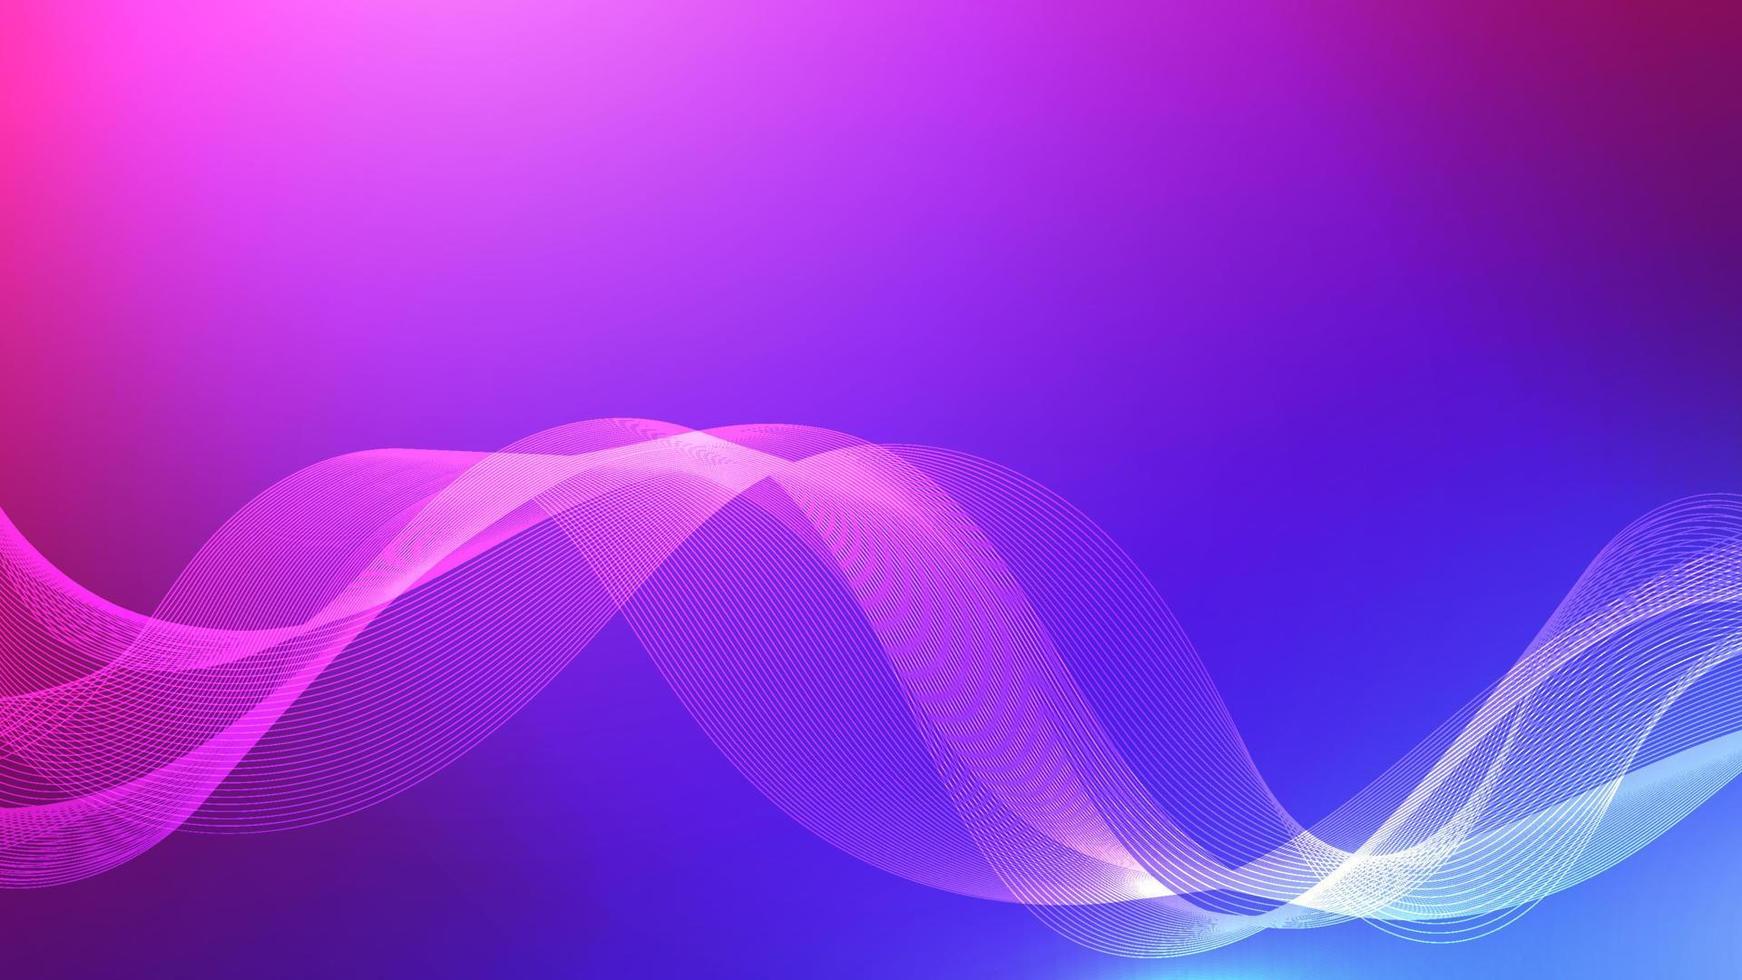 abstracte paarse en roze gradiënt golven achtergrond. gloeiende lijnen op paarse achtergrond vector